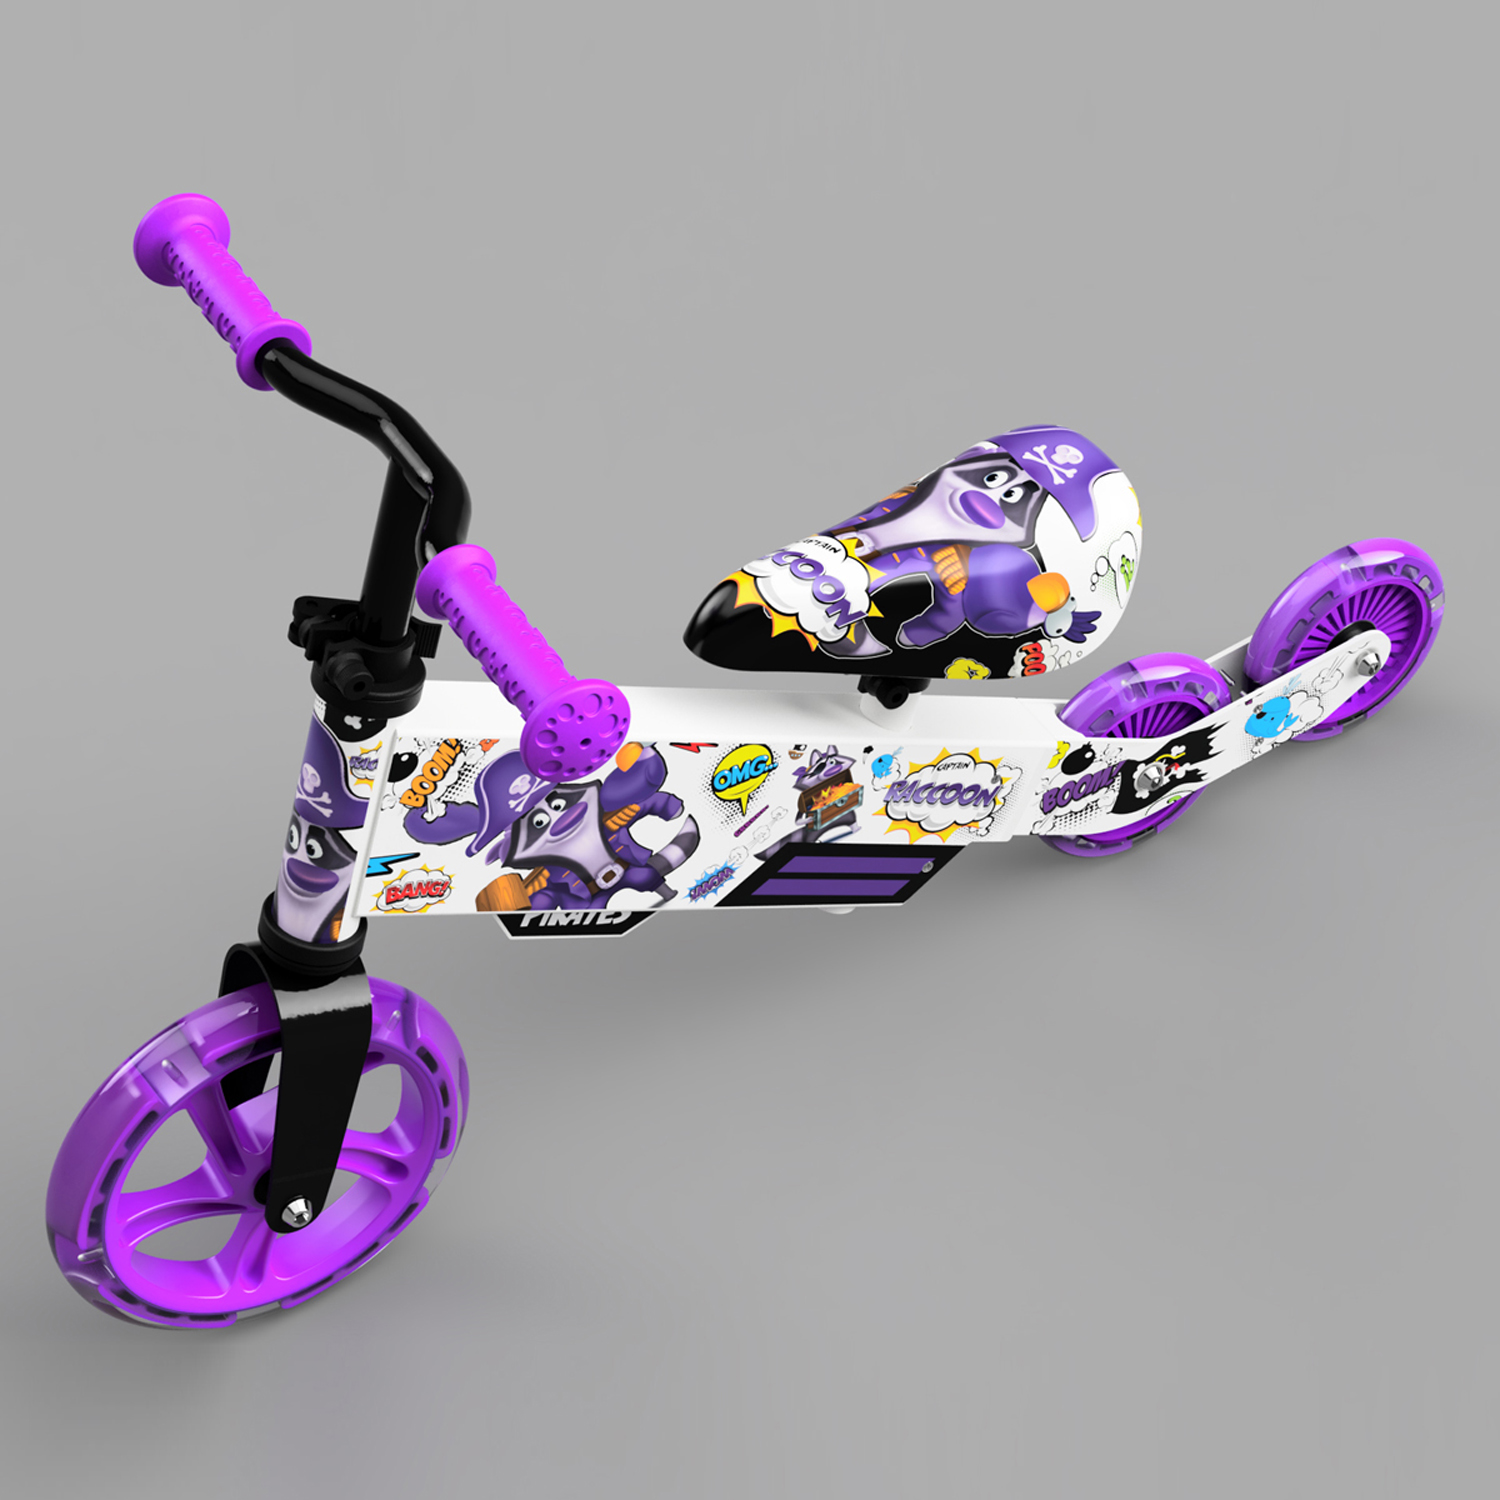 Беговел Small Rider для малышей Turbo Bike фиолетовый - фото 10